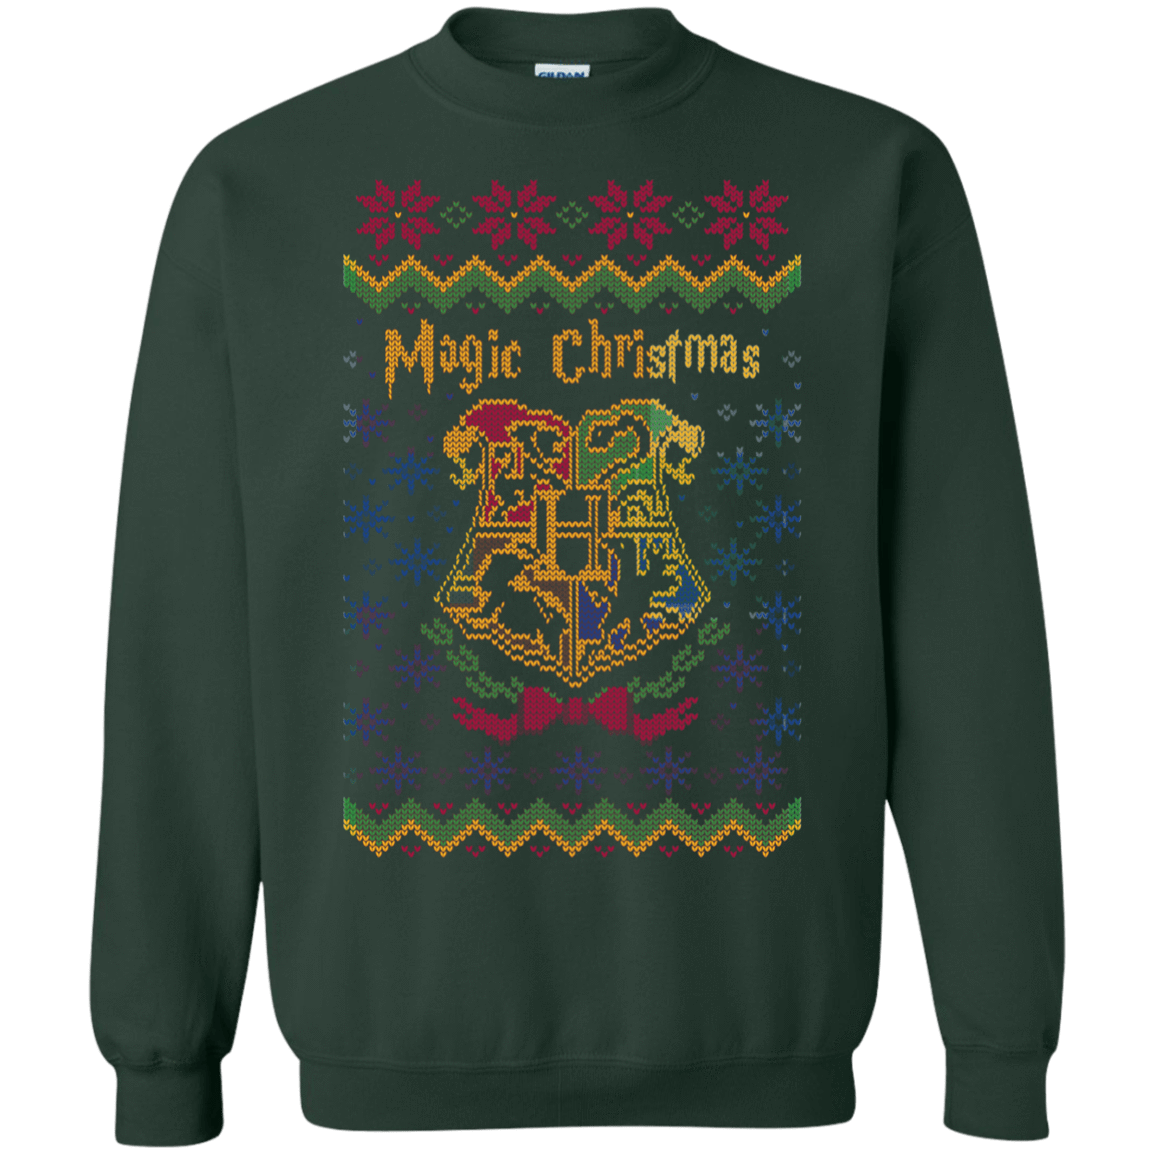 Sweatshirts Forest Green / Small Magic Christmas Crewneck Sweatshirt